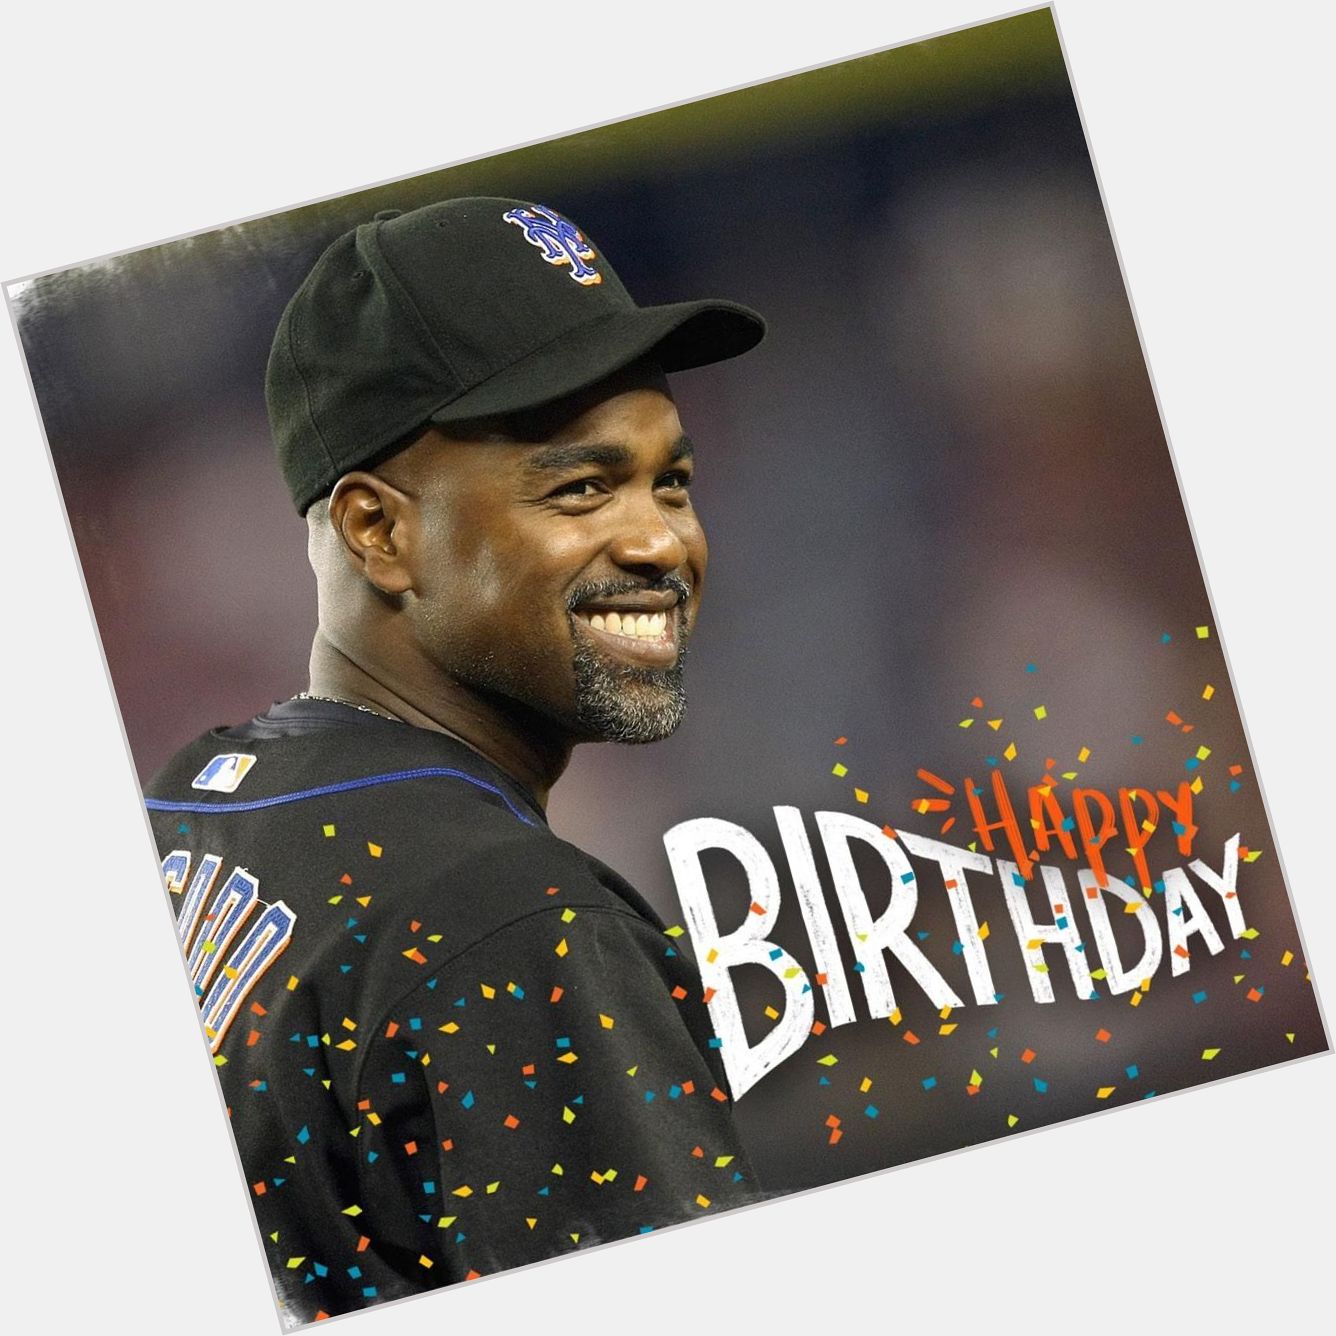 New York Mets: Happy birthday, ... 
 

 
. 